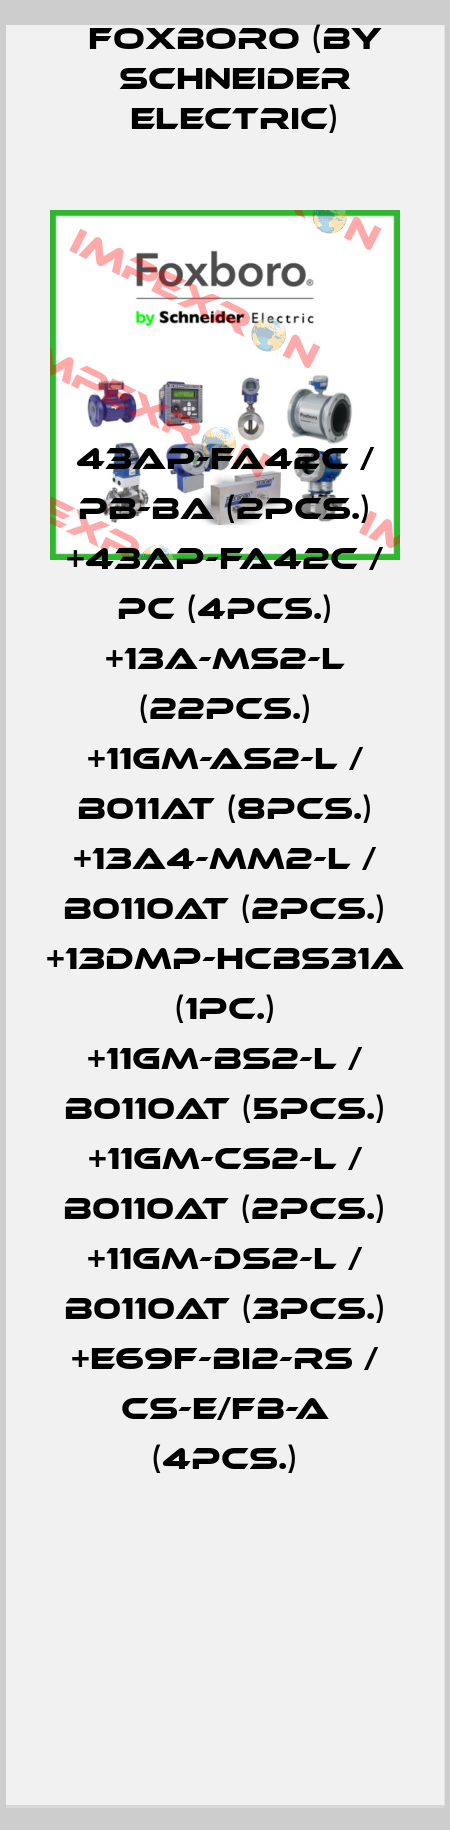 43AP-FA42C / PB-BA (2pcs.) +43AP-FA42C / PC (4pcs.) +13A-MS2-L (22pcs.) +11GM-AS2-L / B011AT (8pcs.) +13A4-MM2-L / B0110AT (2pcs.) +13DMP-HCBS31A (1pc.) +11GM-BS2-L / B0110AT (5pcs.) +11GM-CS2-L / B0110AT (2pcs.) +11GM-DS2-L / B0110AT (3pcs.) +E69F-BI2-RS / CS-E/FB-A (4pcs.) Foxboro (by Schneider Electric)